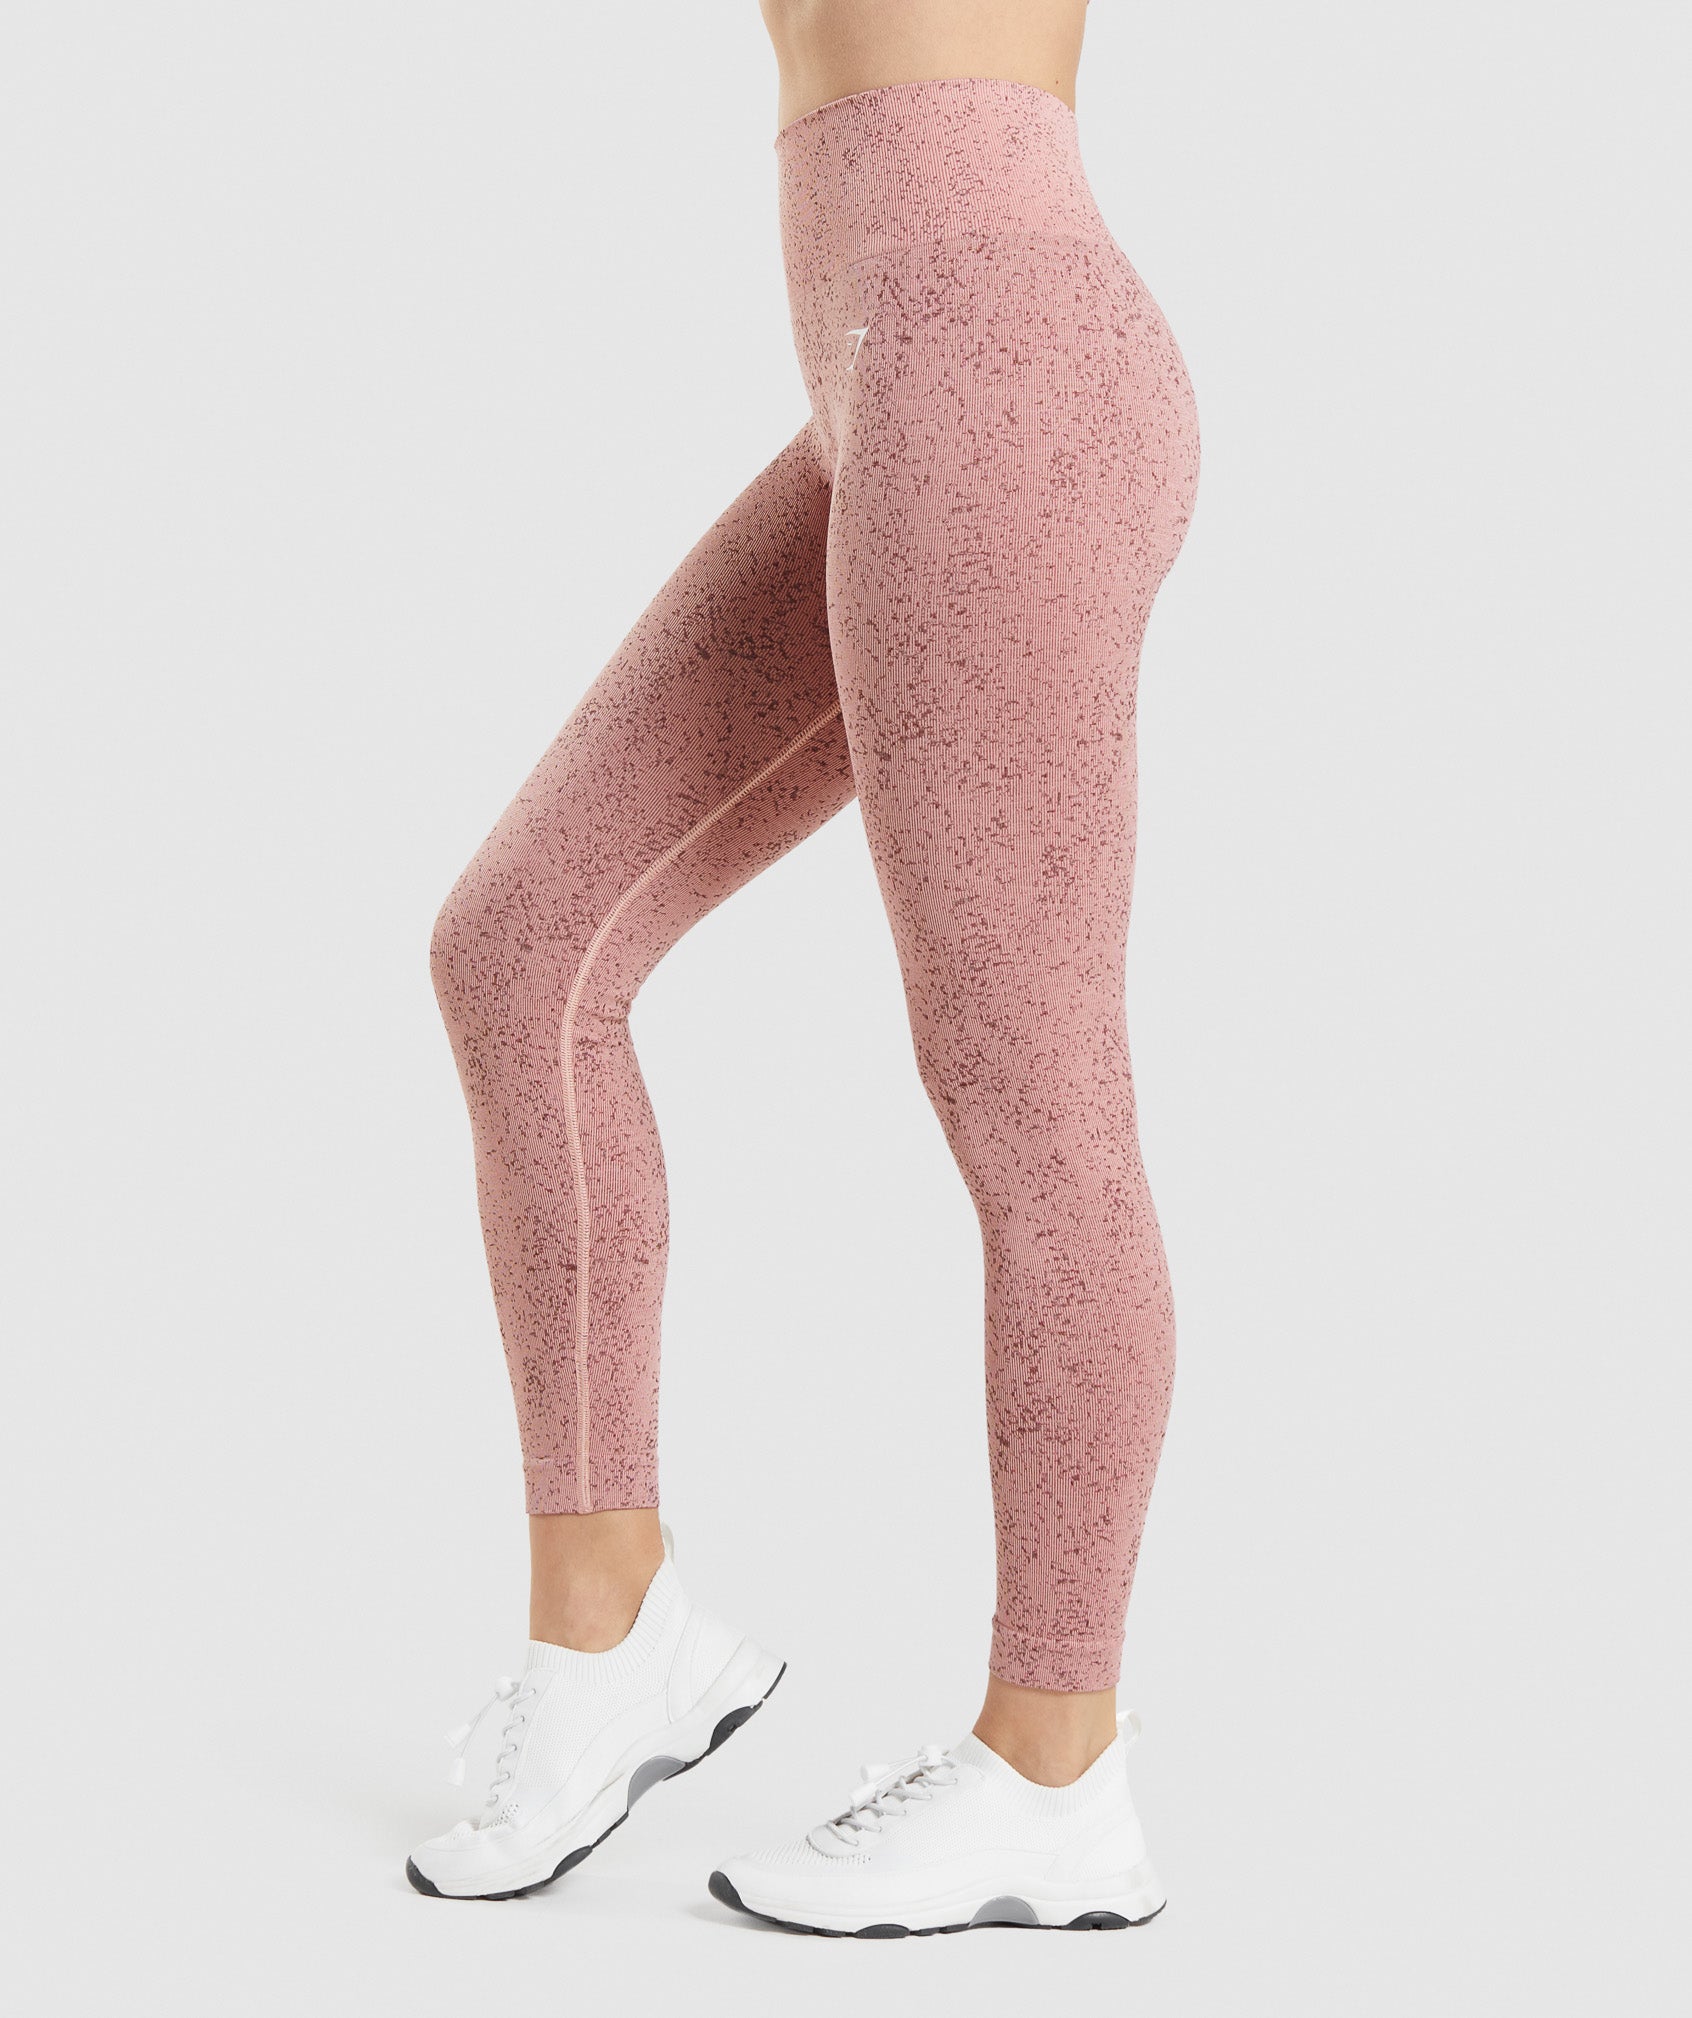 Gymshark Light Pink & Grey Seamless Adapt High Waisted Seamless Leggings -  $28 - From Second